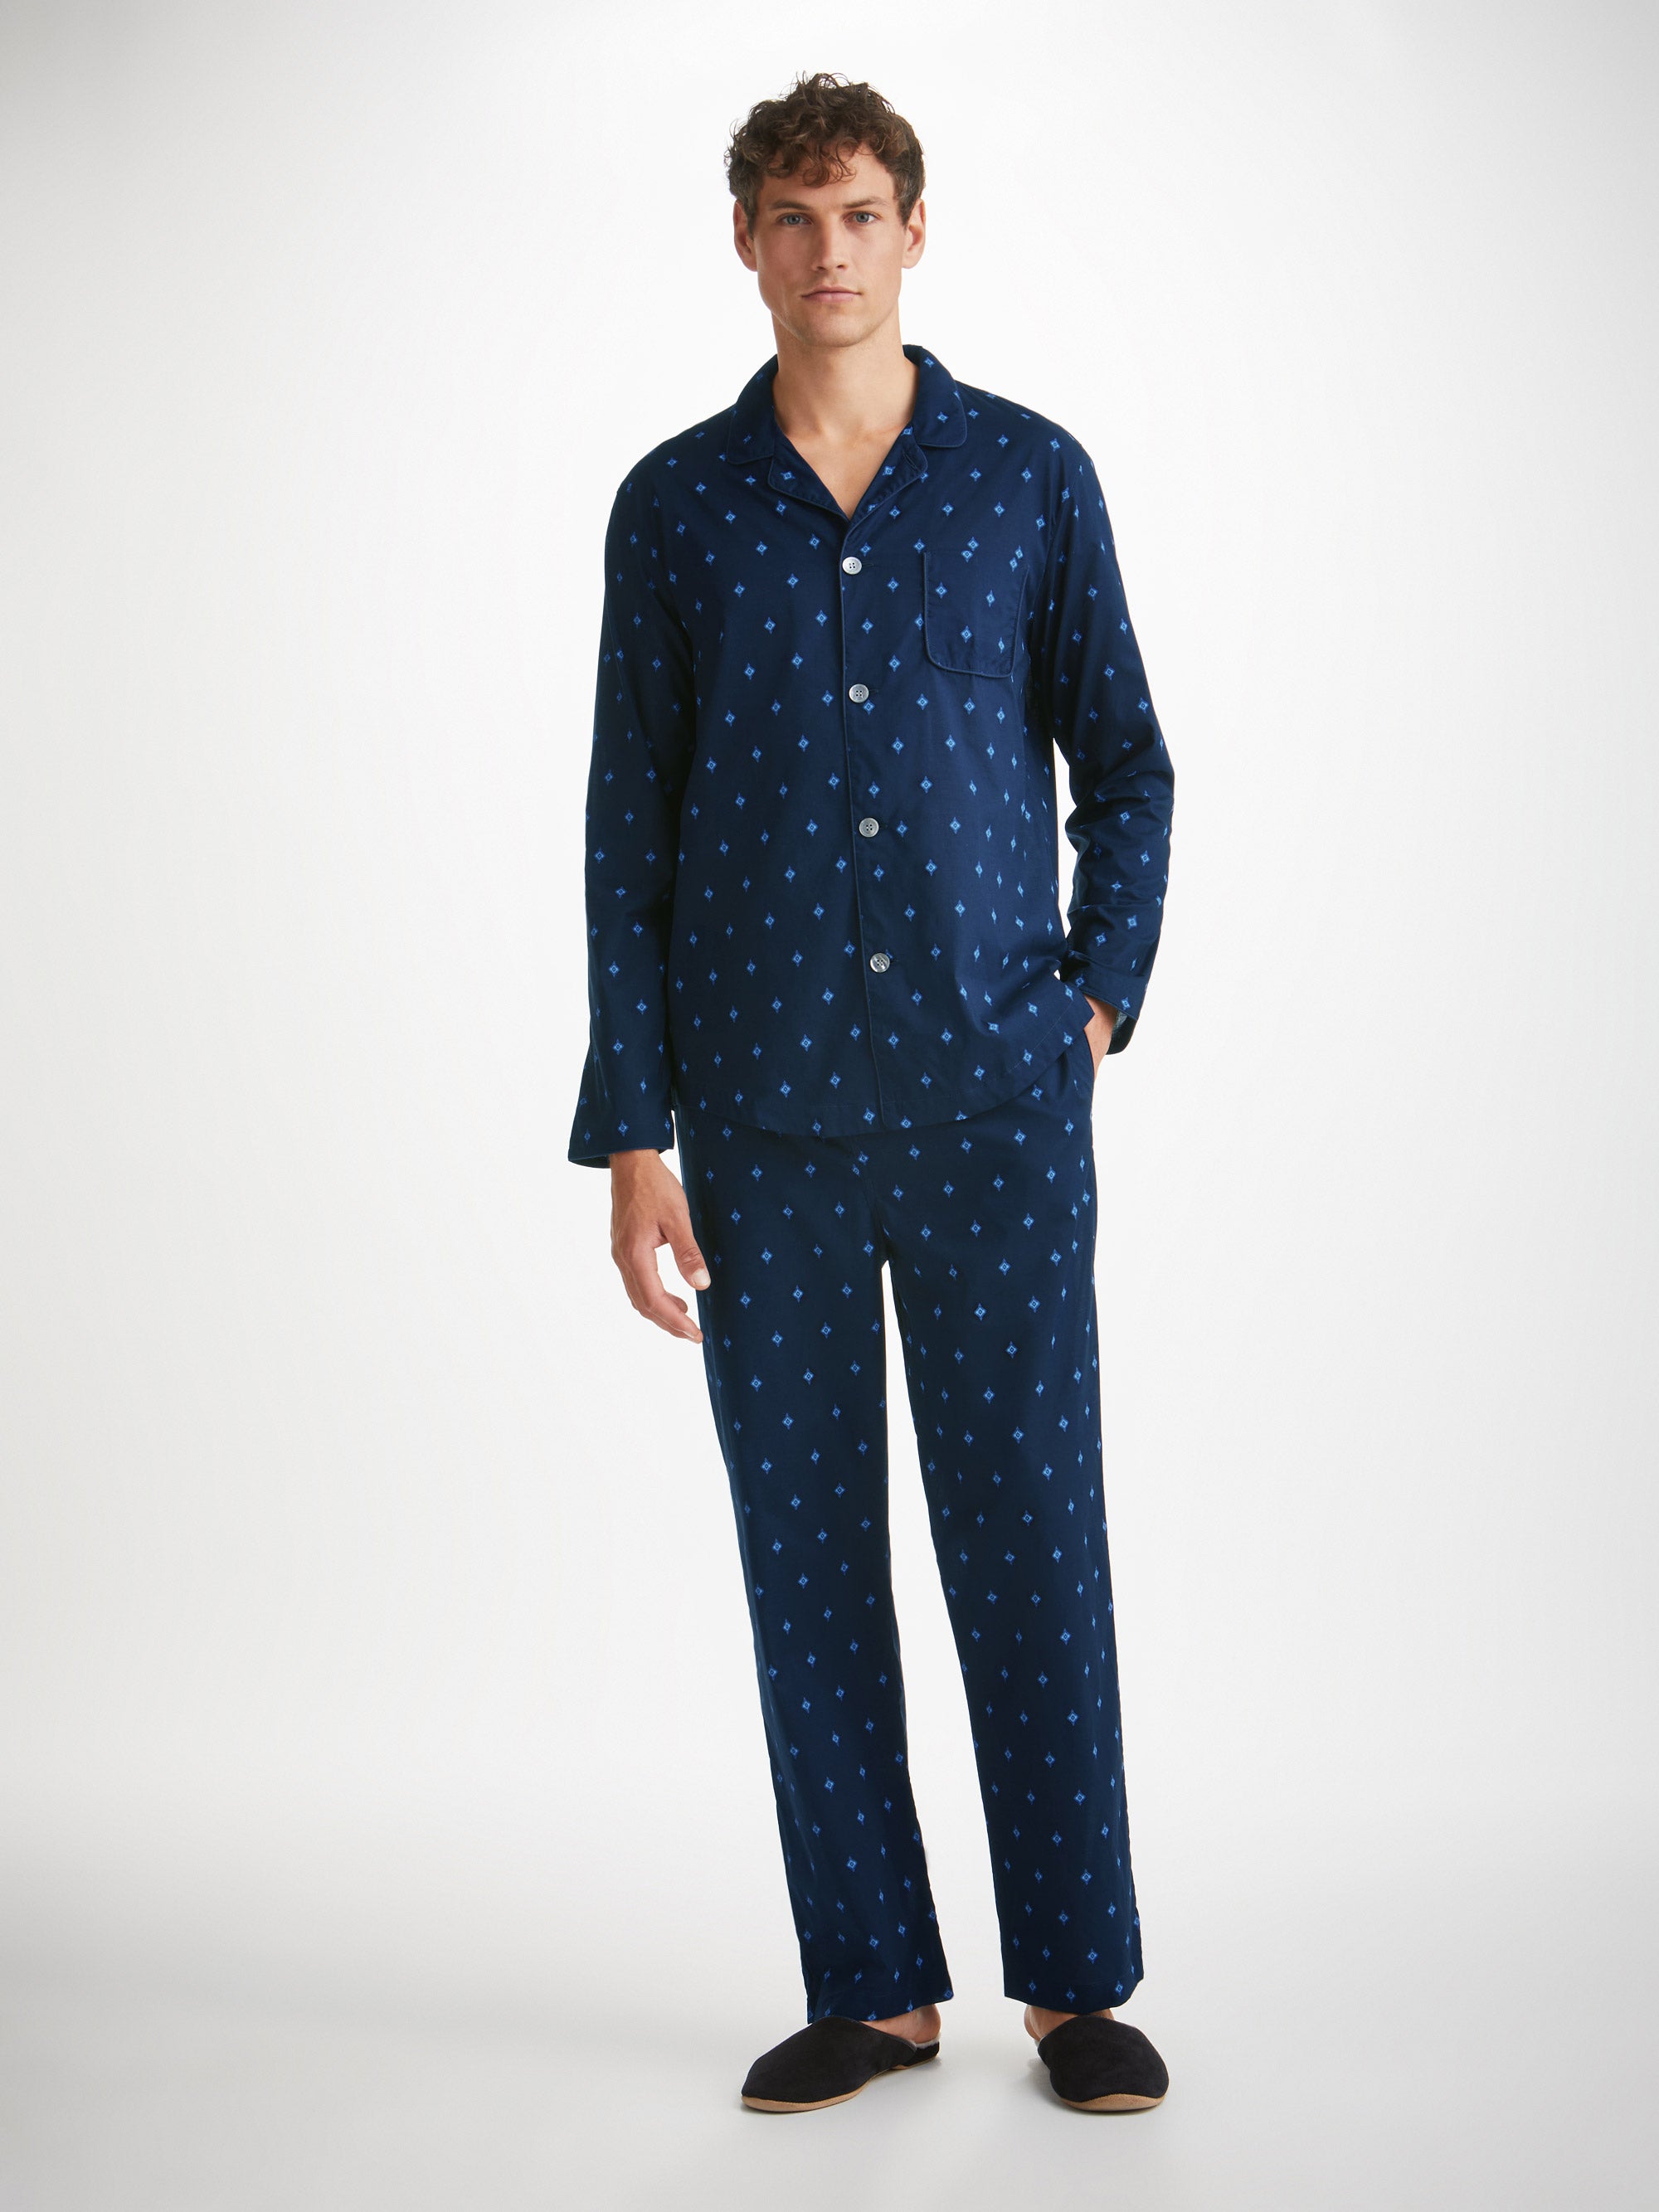 Men's Modern Fit Pyjamas Nelson 98 Cotton Batiste Navy